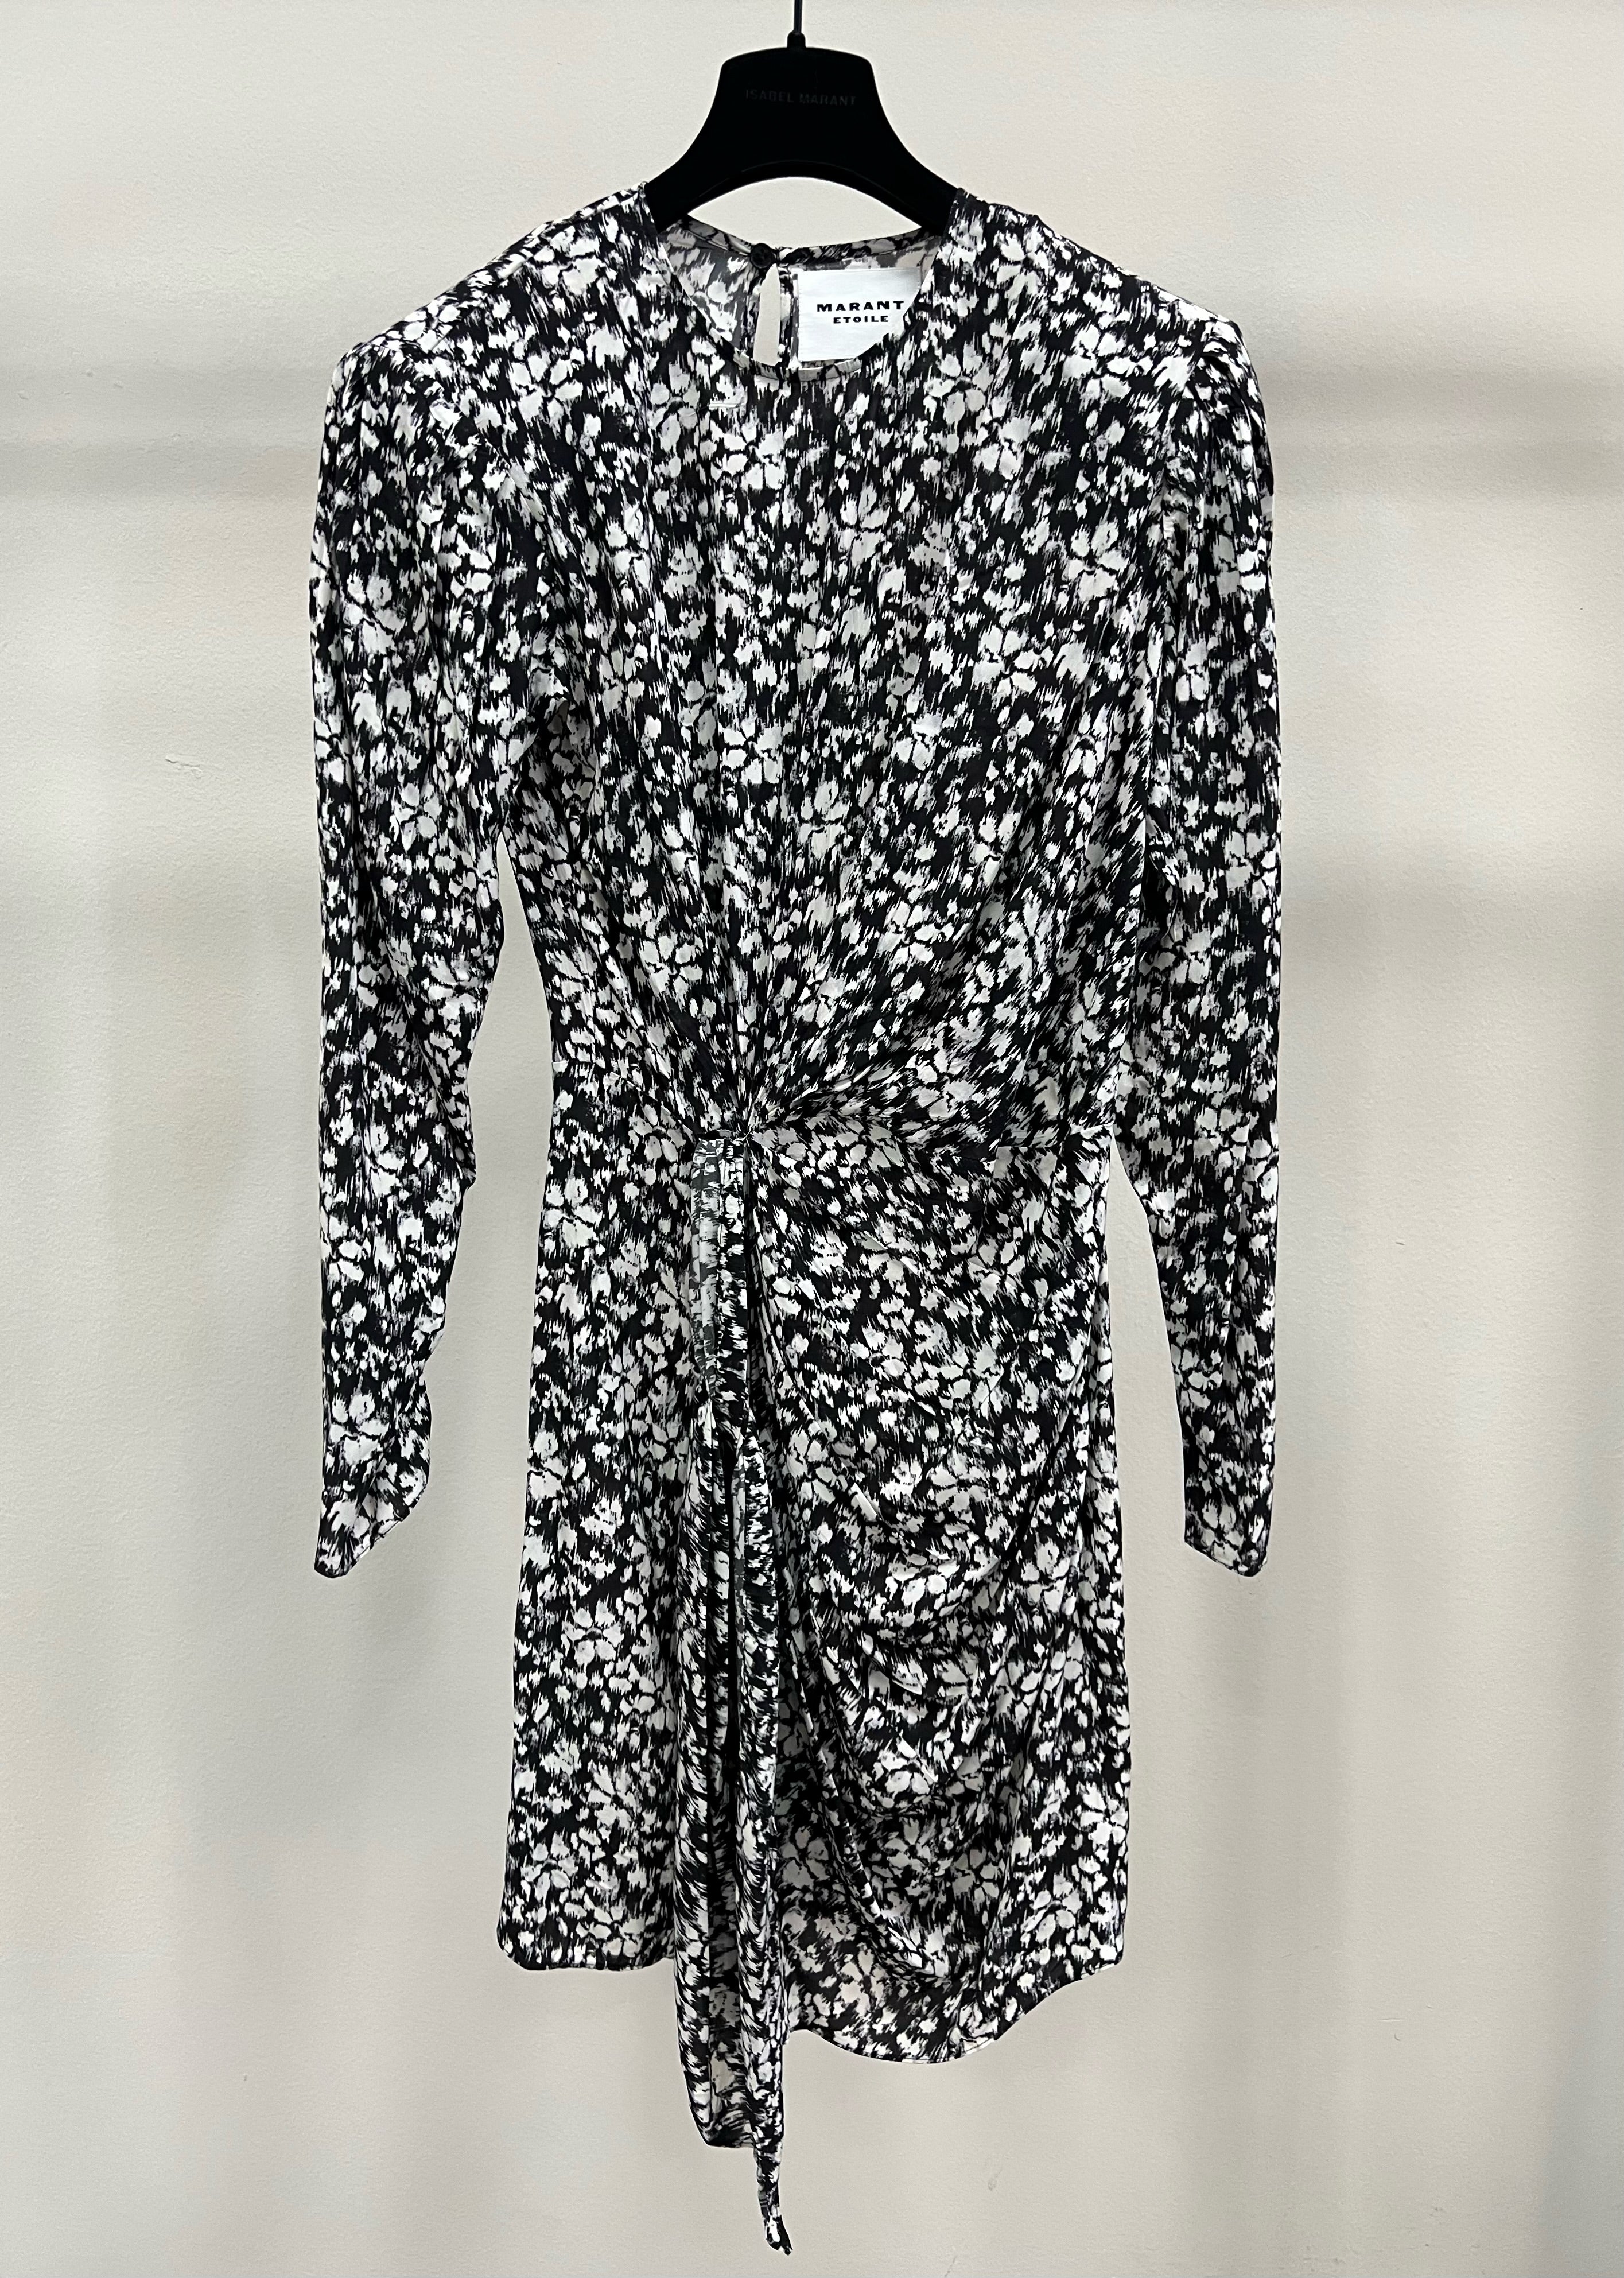 ISABEL MARANT DULCE DRESS BLACK WHITE – Nicolas Concept Store